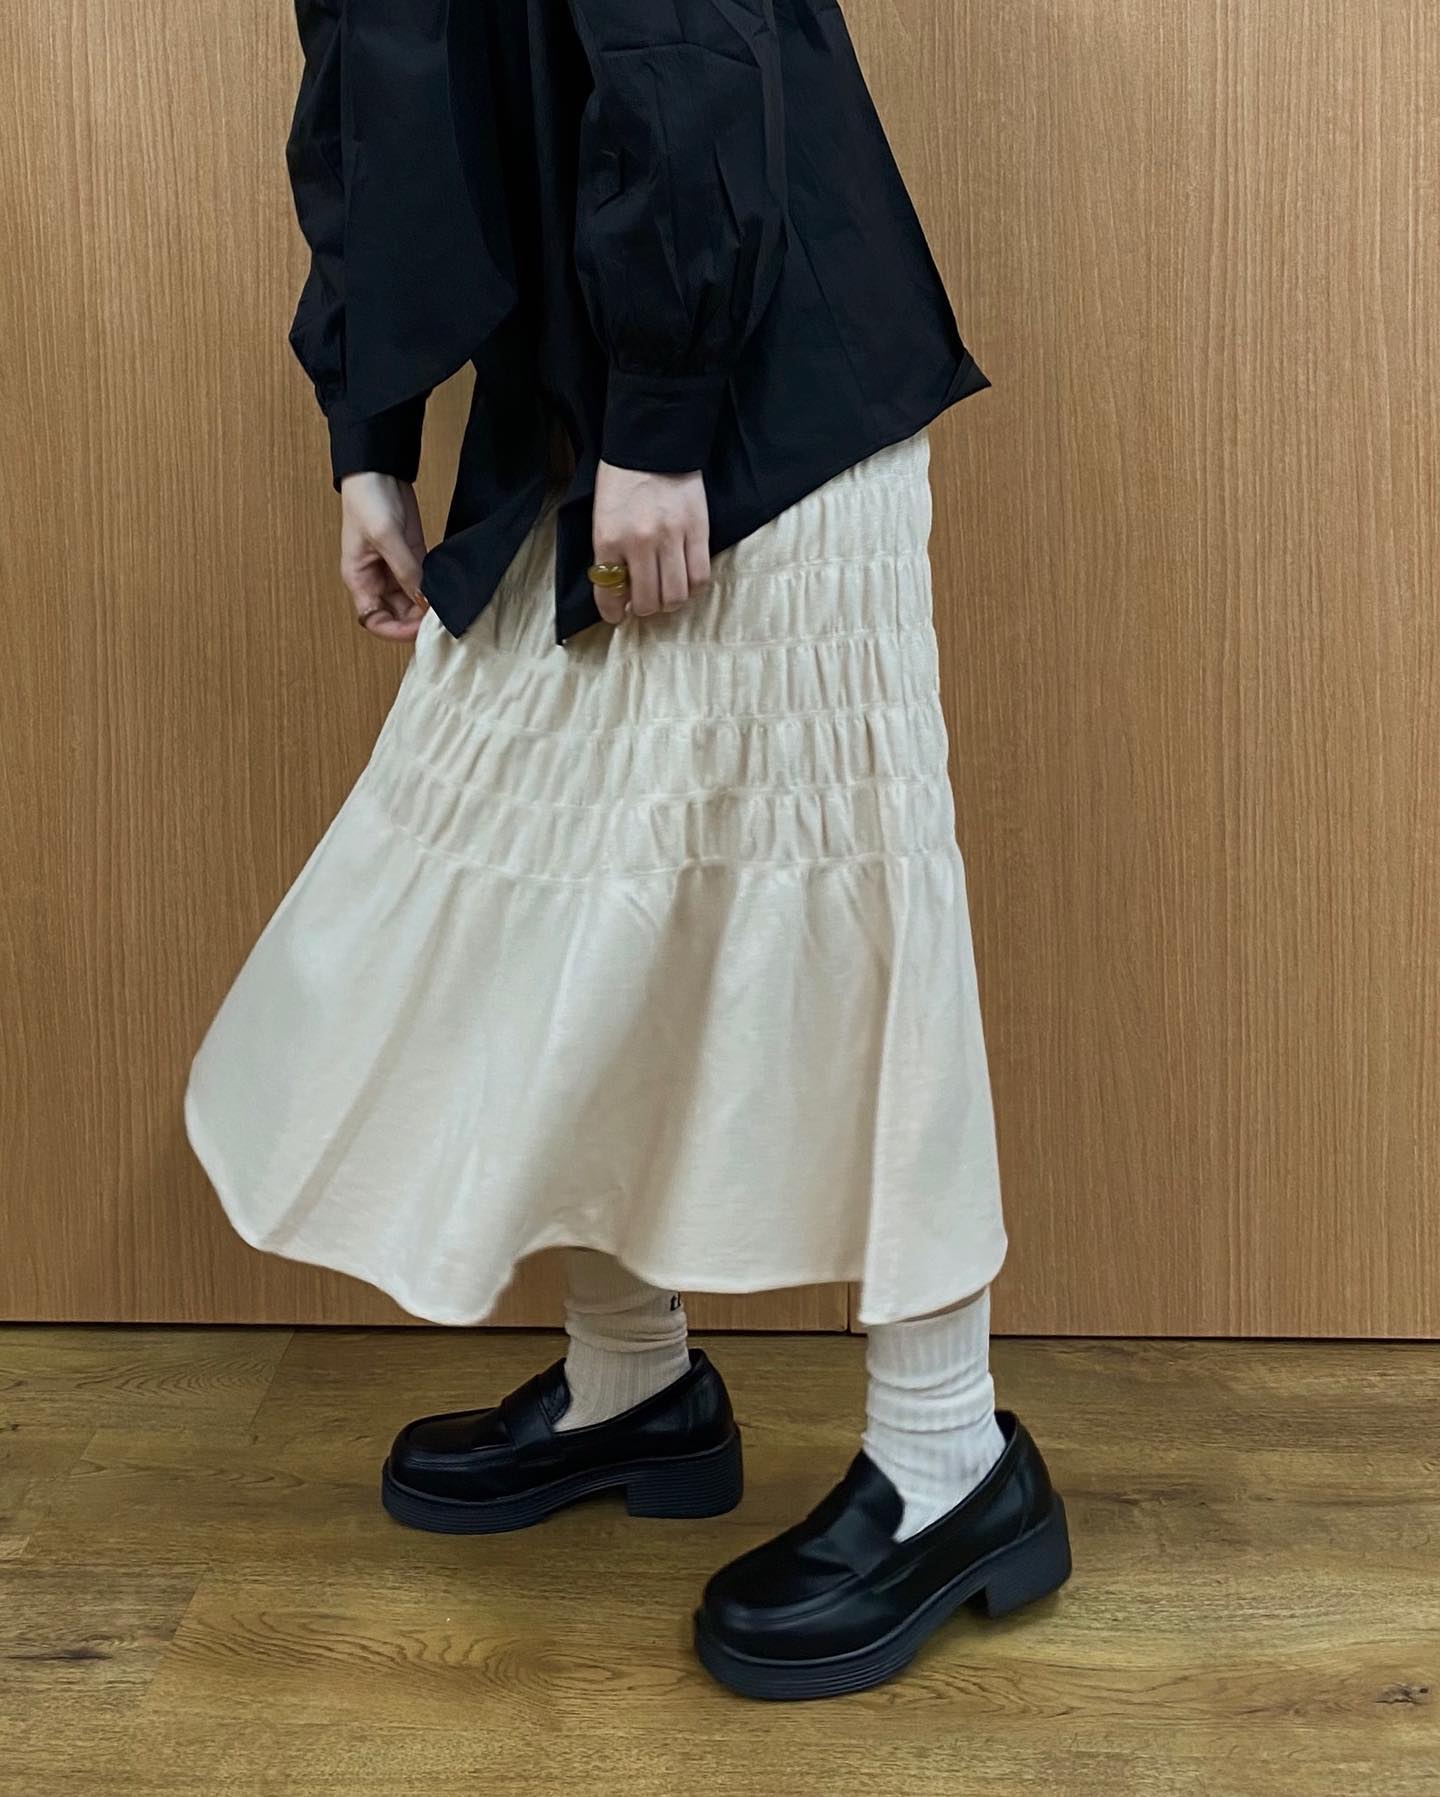 " new item! "⁡︎ニットシャーリングスカート ¥4,290⁡⁡新しいスカートが取り扱い店舗に入荷致しました。⁡オンラインも近日入荷予定です。⁡⁡ ⁡⁡⁡ ⁡⁡⁡ ⁡#urmelty #ユアメルティ #スカート #ニットスカート #デザインスカート #スカートコーデ #ニットスカートコーデ #デザインスカートコーデ #冬コーデ #冬スカートコーデ #ガーリーコーデ #ガーリーアイテム #カジュアルコーデ #カジュアルアイテム #冬アイテム #冬コーデ #韓国っぽ #韓国っぽコーデ #韓国ファッション #韓国風 #コリヨジャ #オトジョ #大人女子 #オトジョコーデ